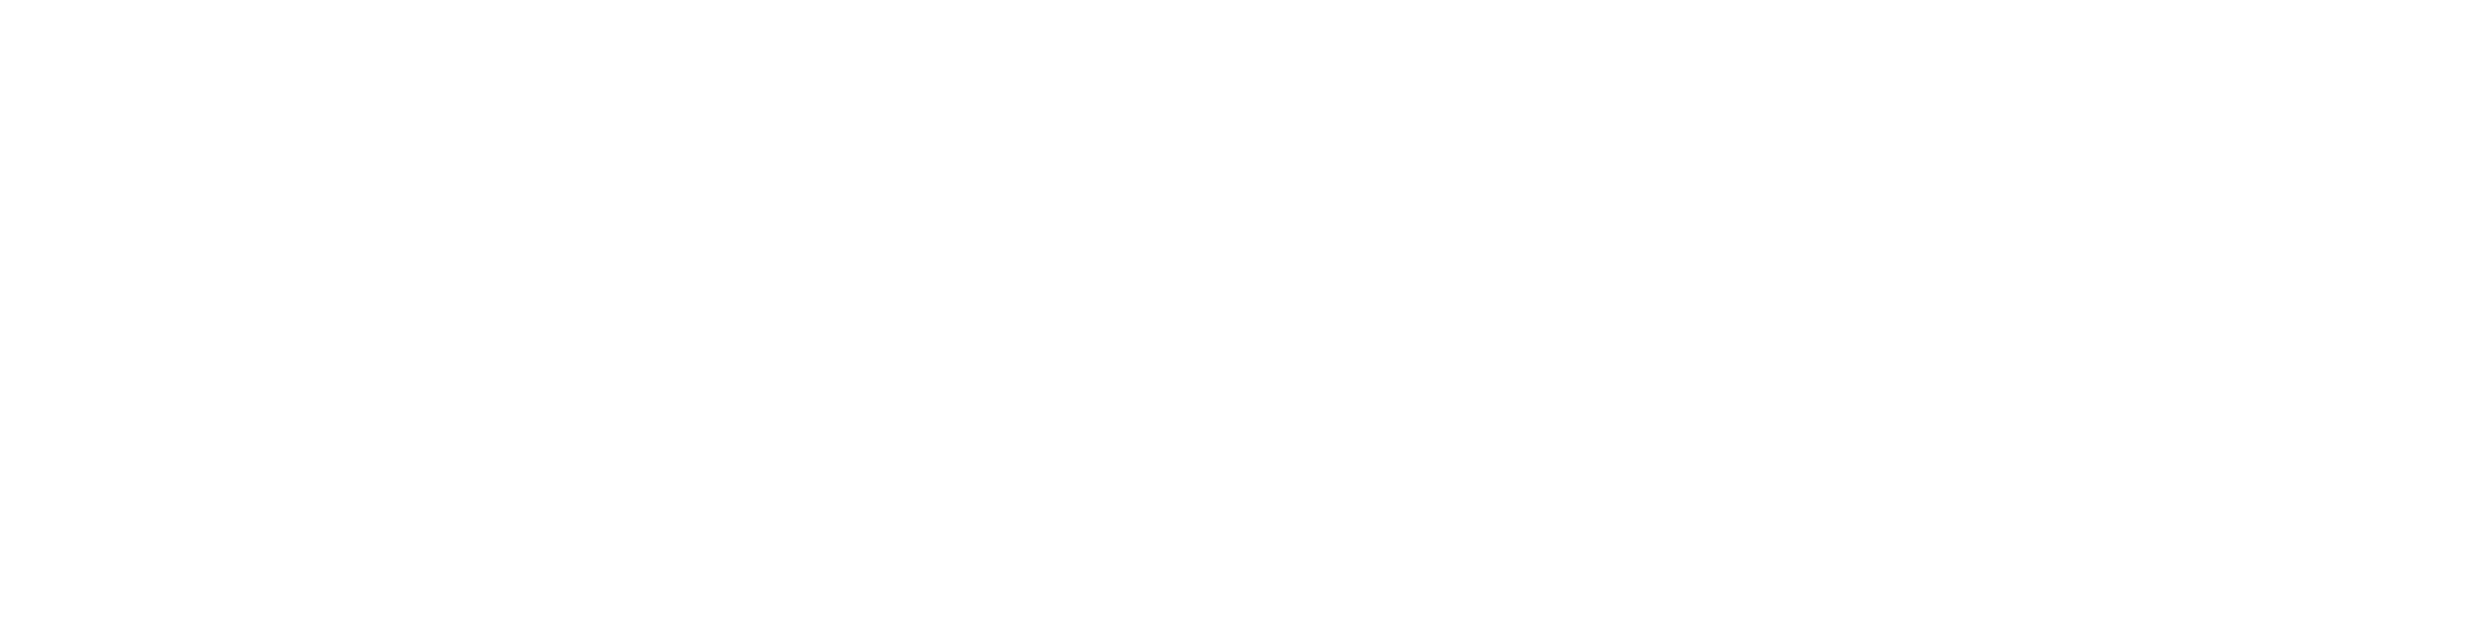 Strategy, Mission, & Values  Columbia Sportswear Company